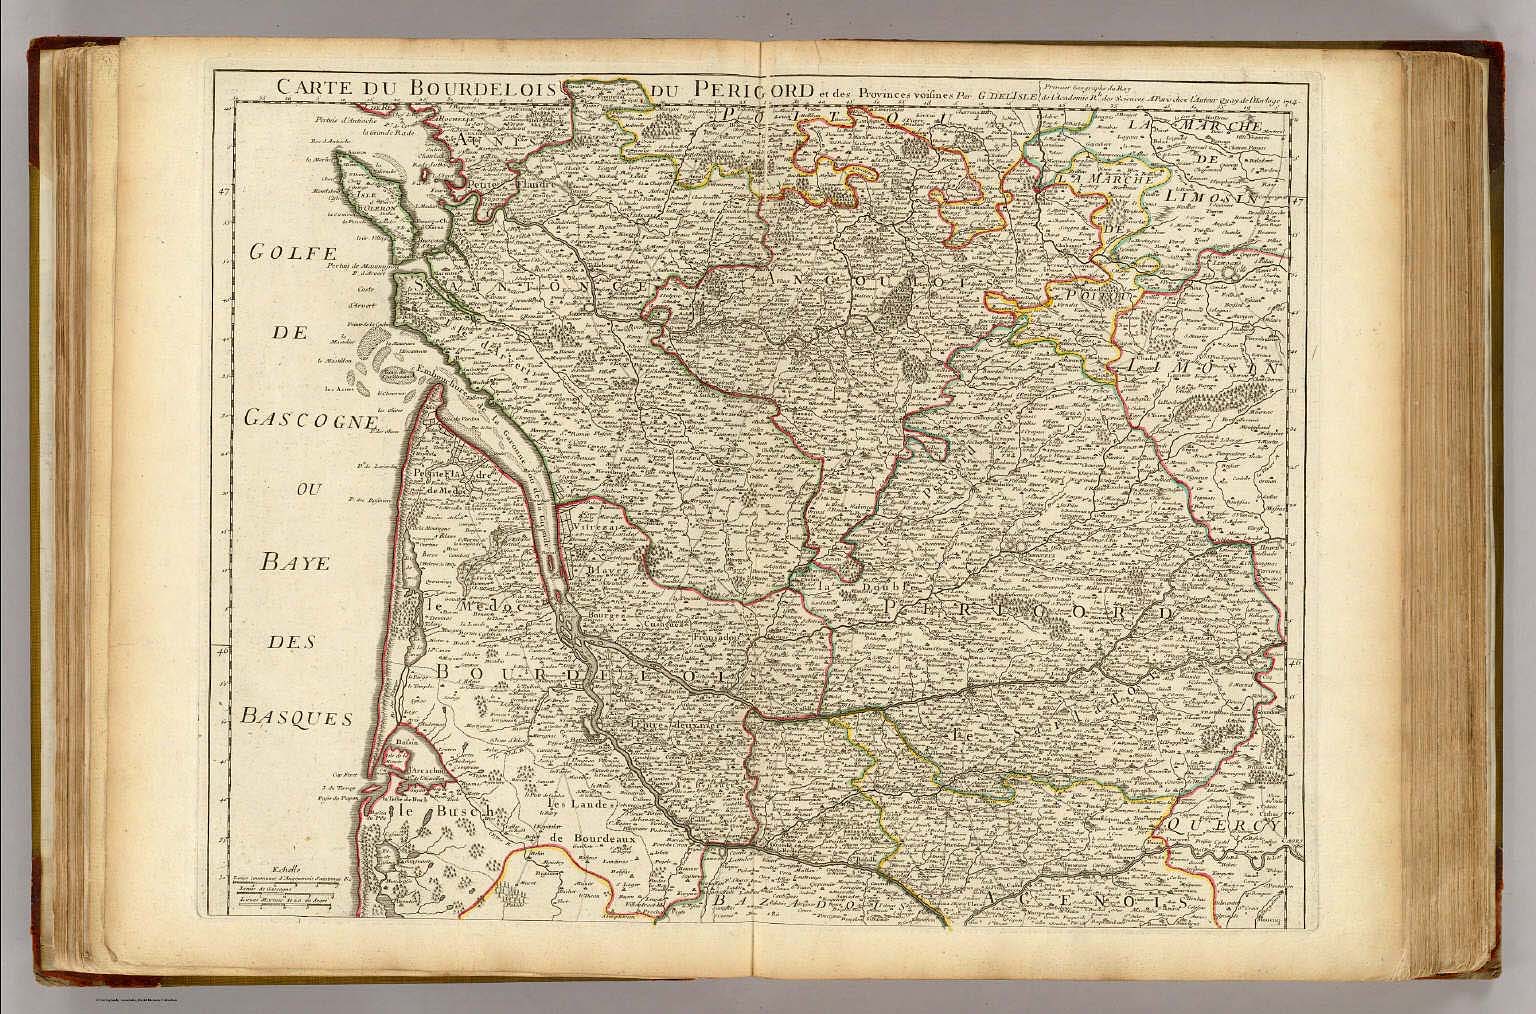 Bourdelois du Perigord. - David Rumsey Historical Map Collection